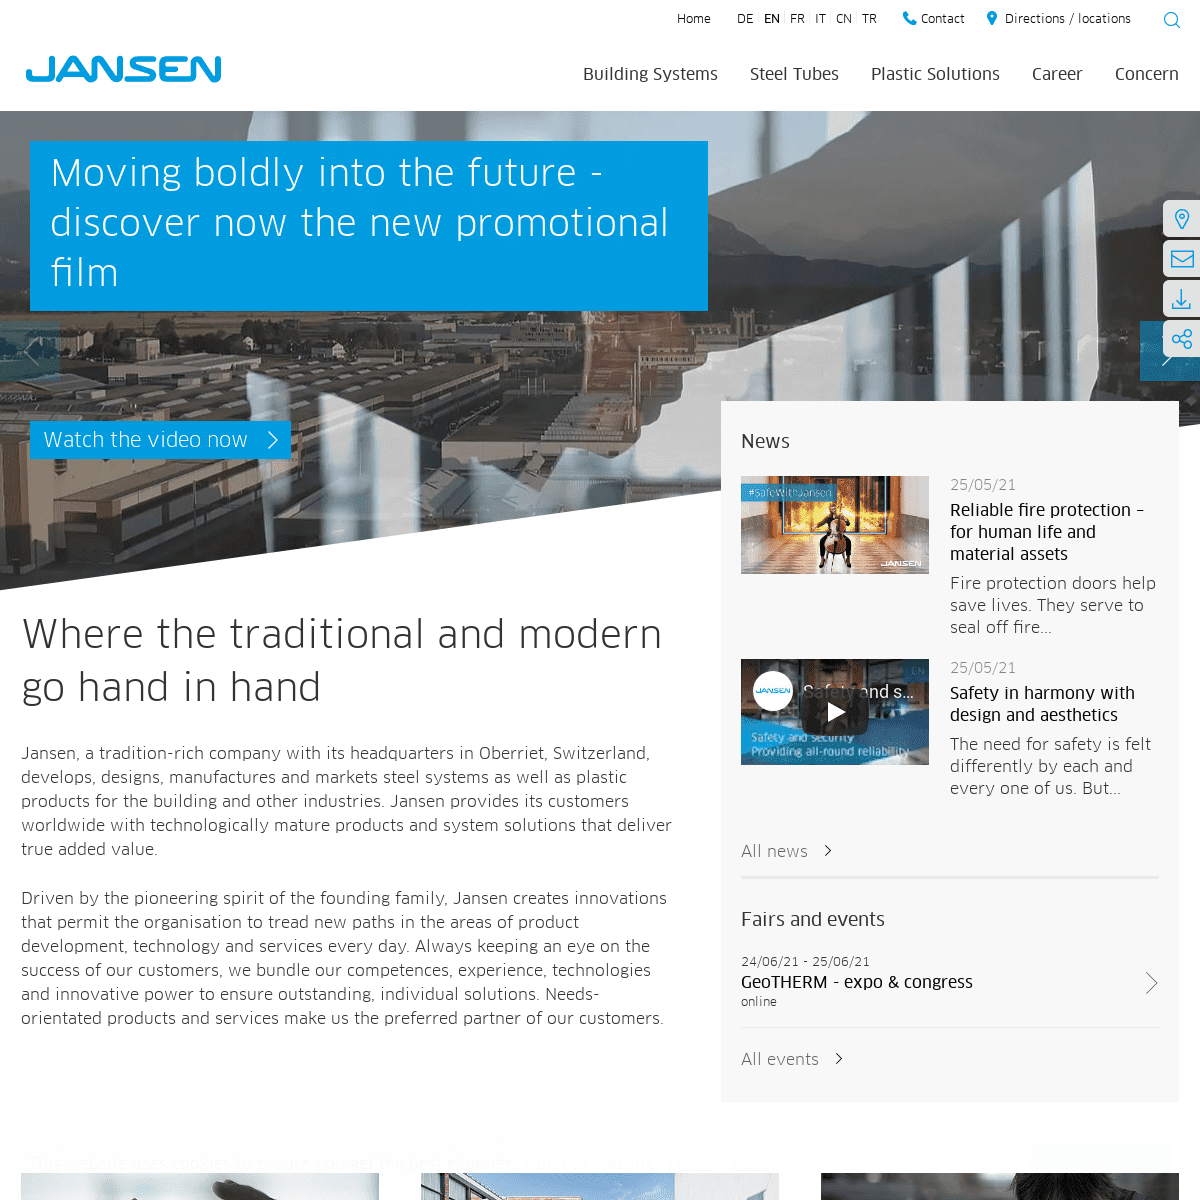 A complete backup of https://jansen.com